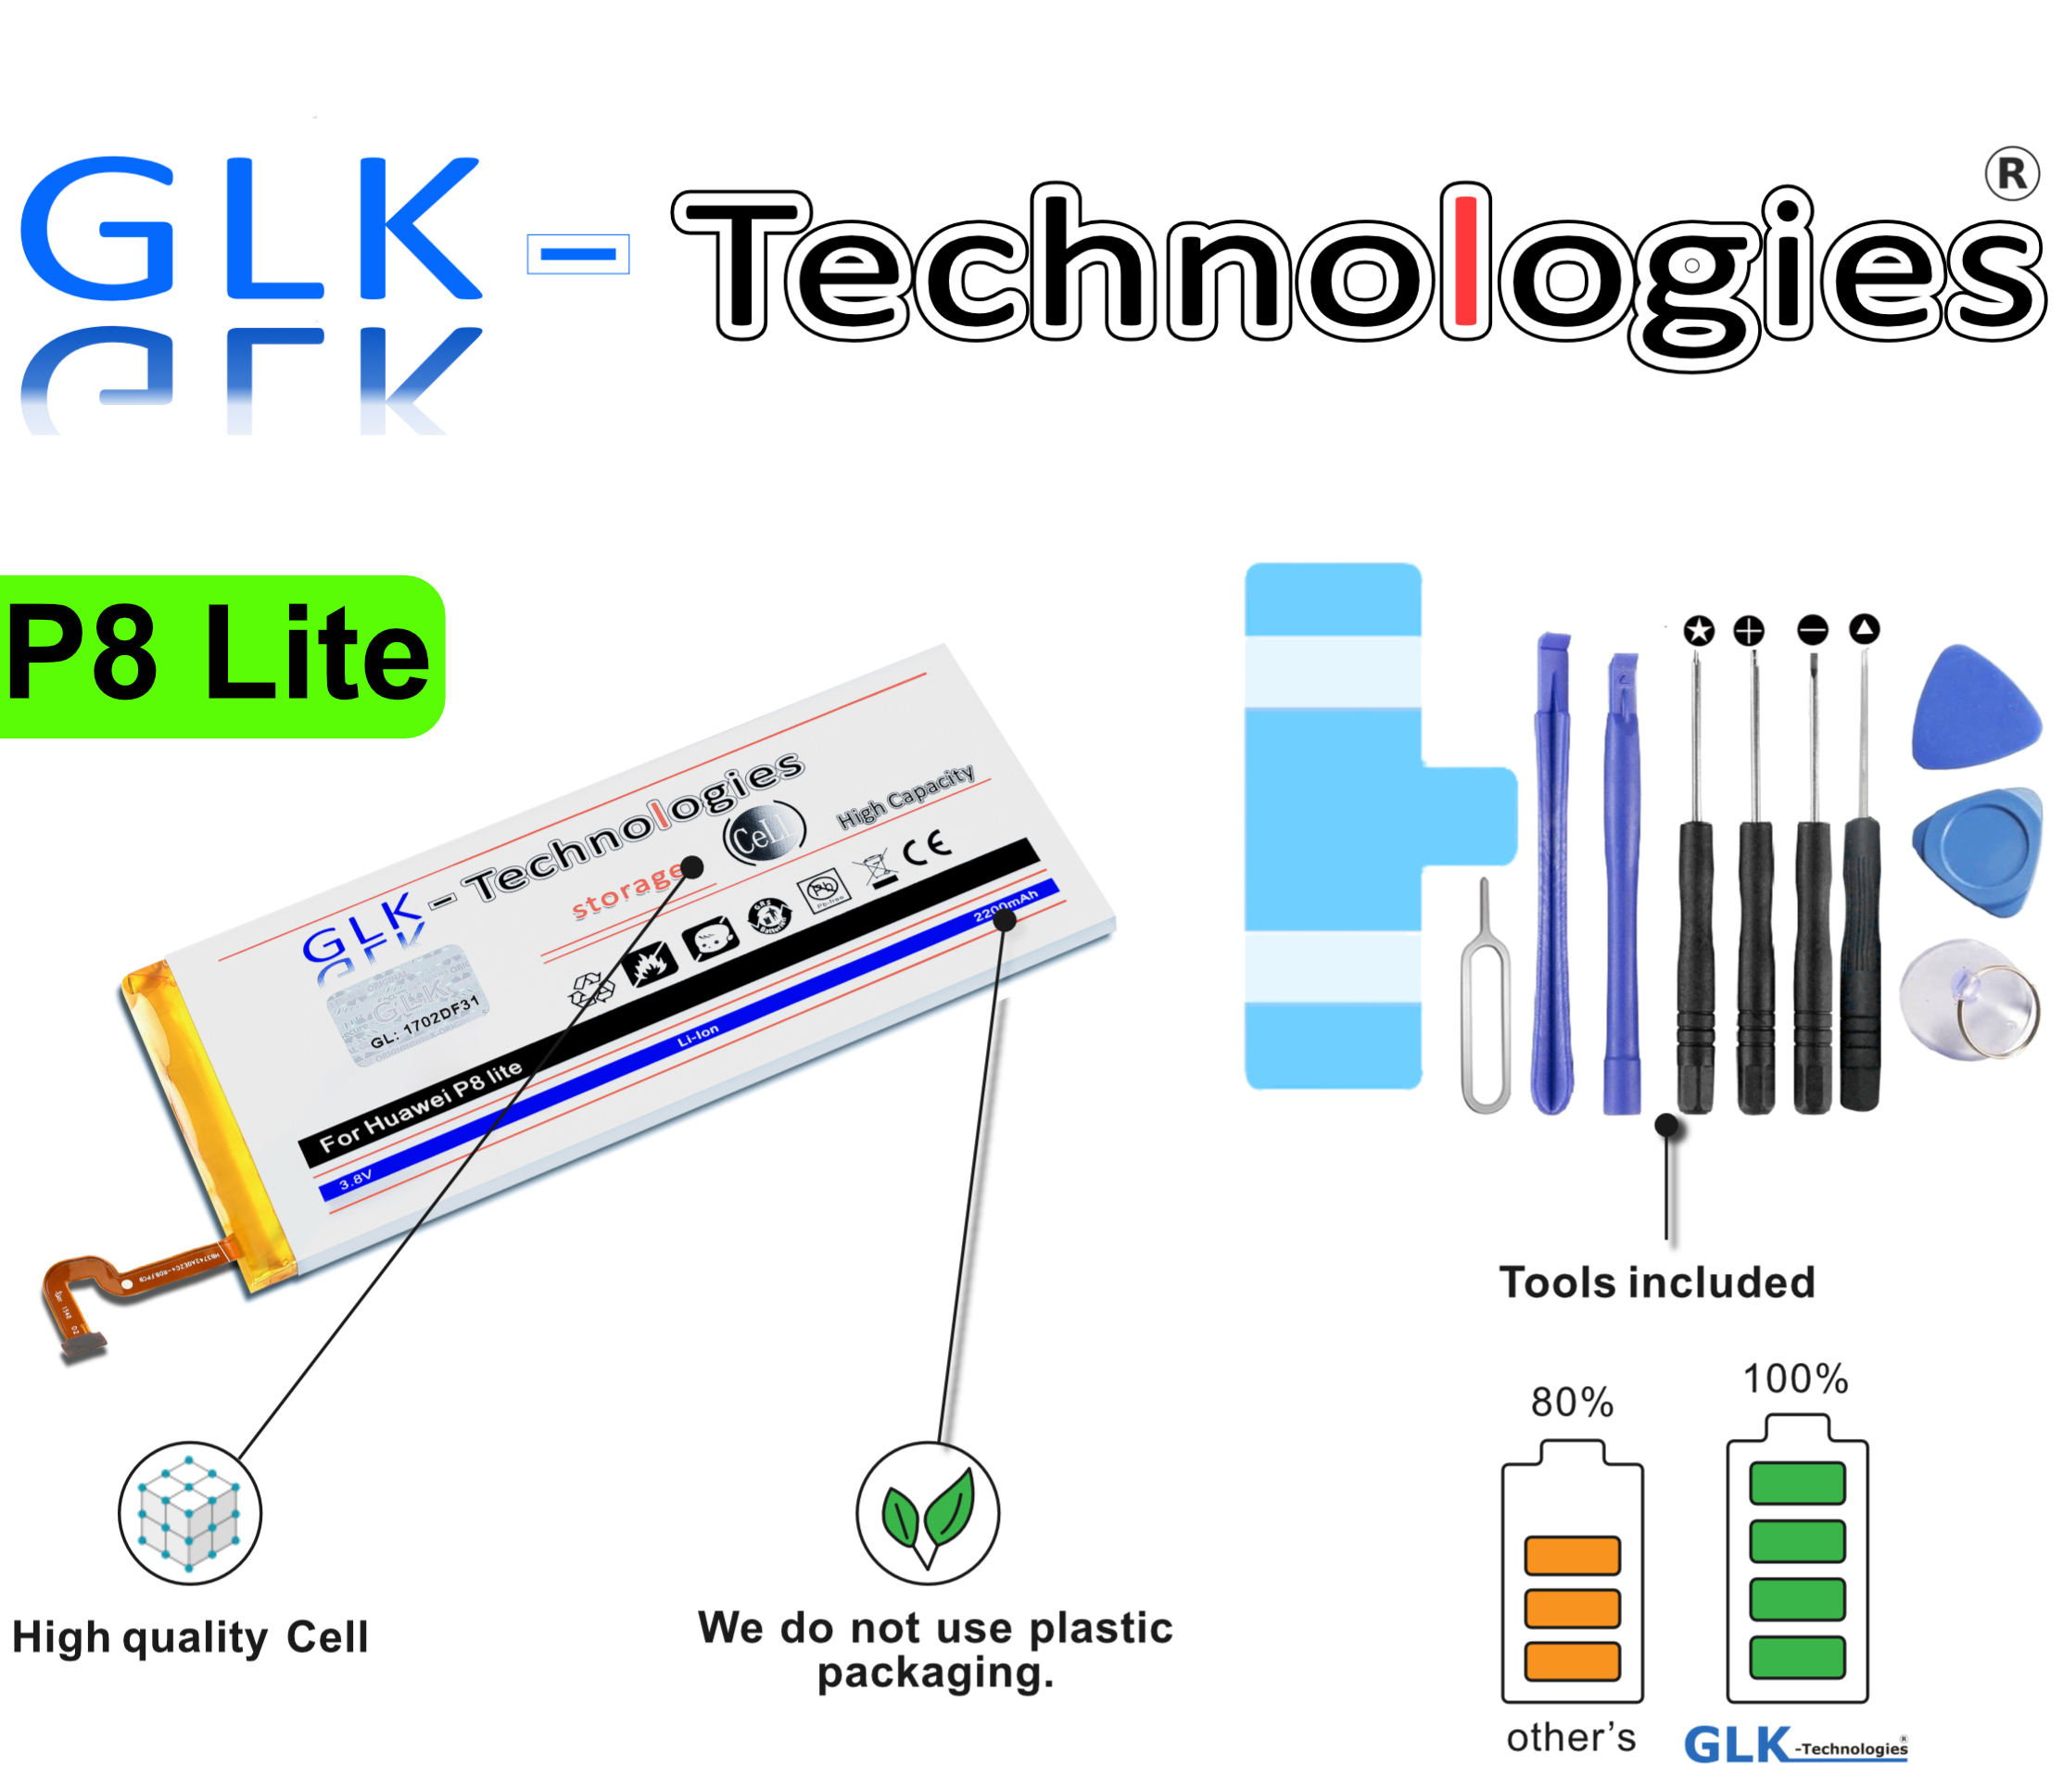 inkl. Smartphone HB3742A0EZC GLK-TECHNOLOGIES Battery Akku Lite Li-Ion für Kit P8 Set Werkzeug Ersatz Akku Huawei Ersatz